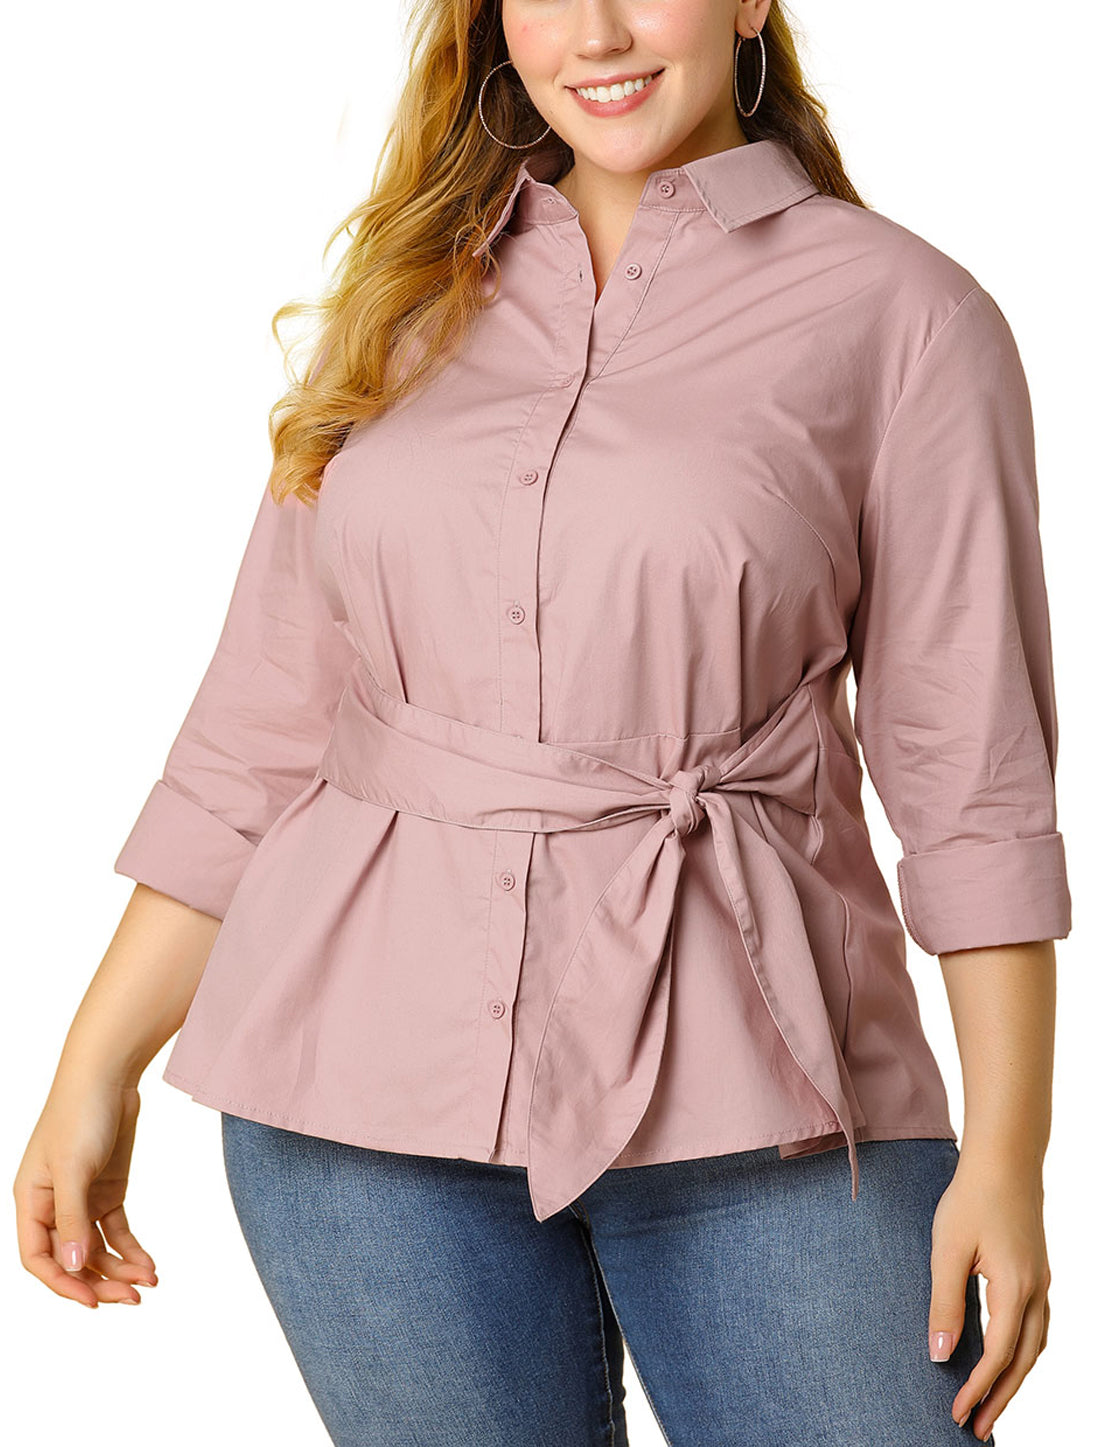 Bublédon Women's Plus Size Button Up Shirts Belted Safari Work Blouse